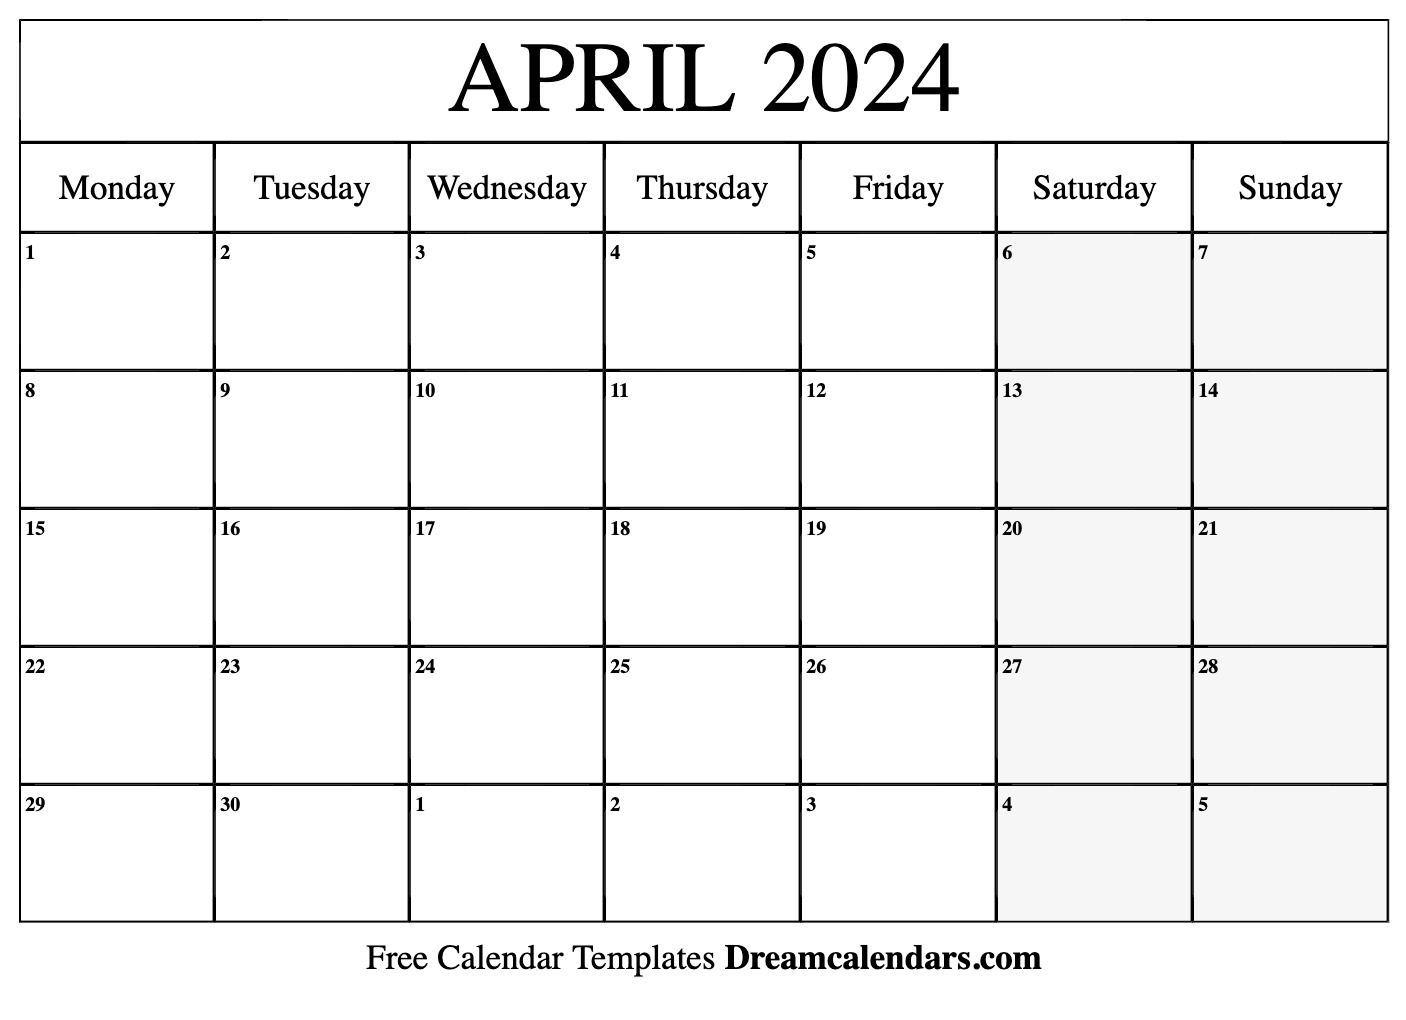 April 2024 Calendar | Free Blank Printable With Holidays for April 2024 Weekly Calendar Printable